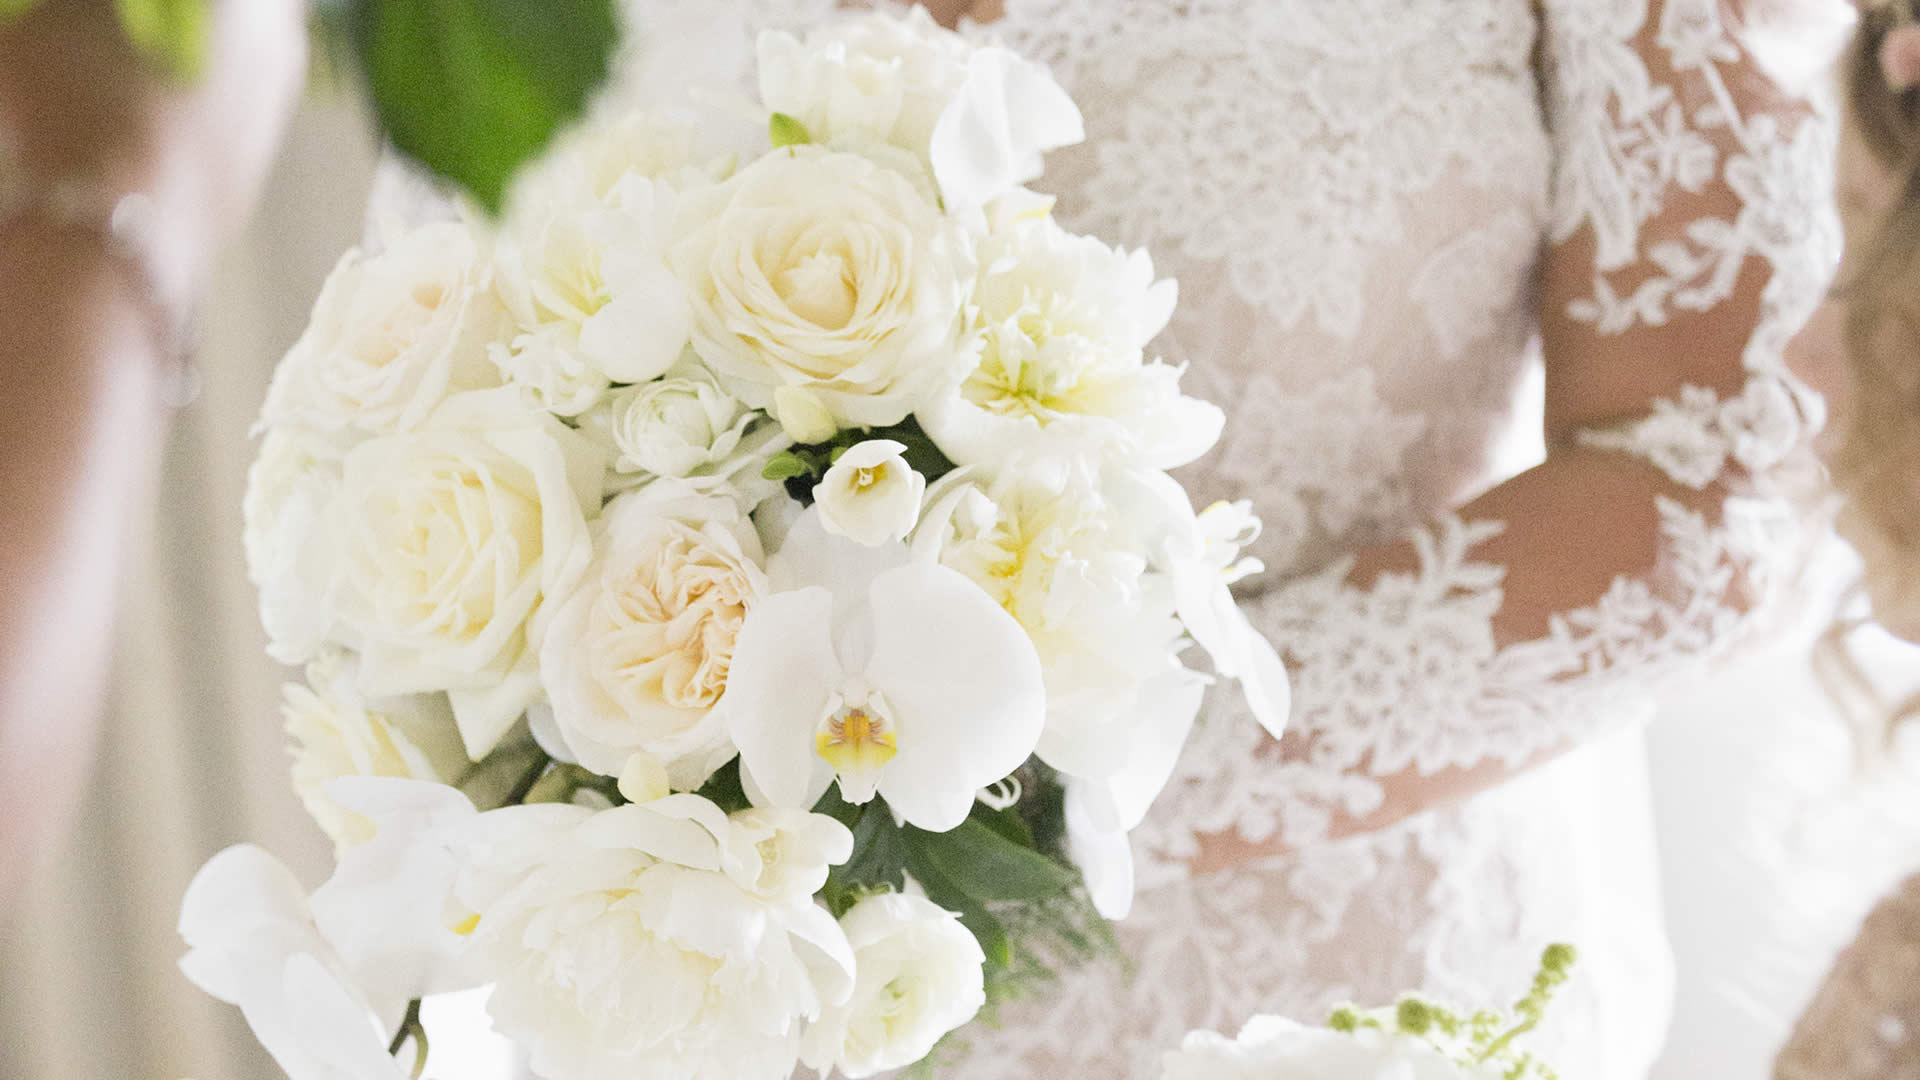 Danielle & Chris - Flourish Flowers, Weddings